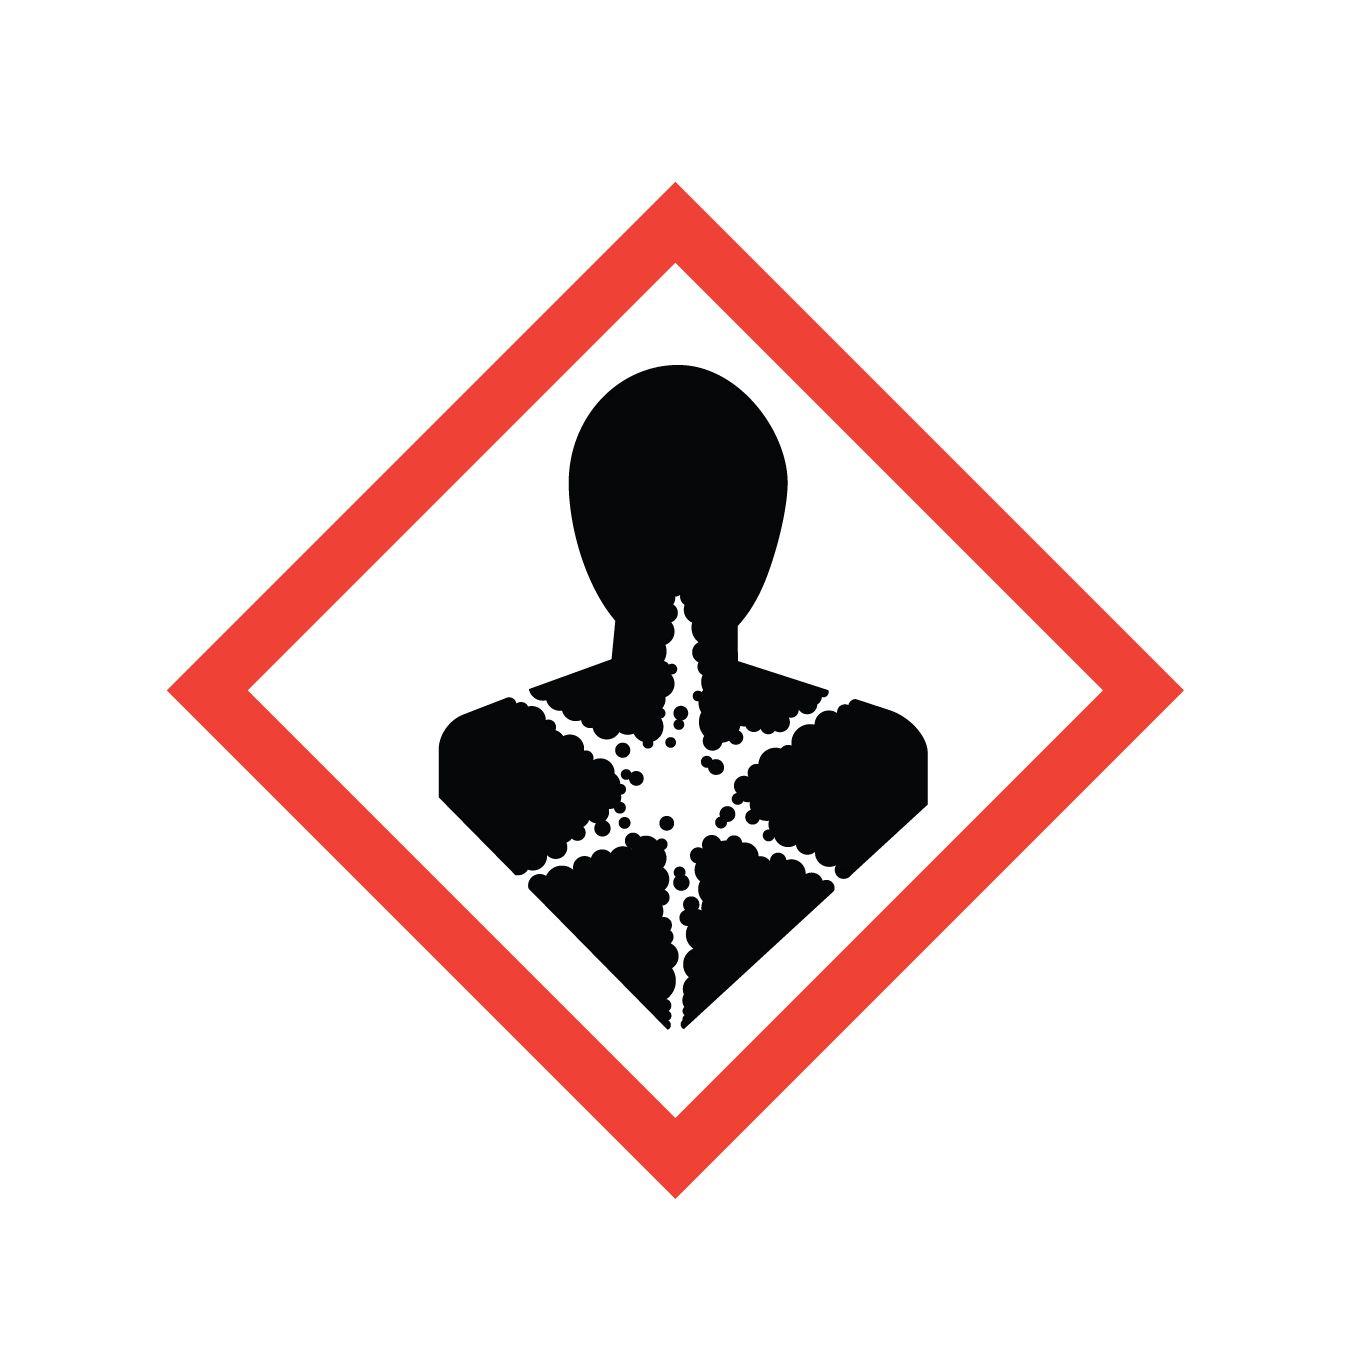 Hazard Logo - Know Your Hazard Symbols (Pictograms) | Office of Environmental ...